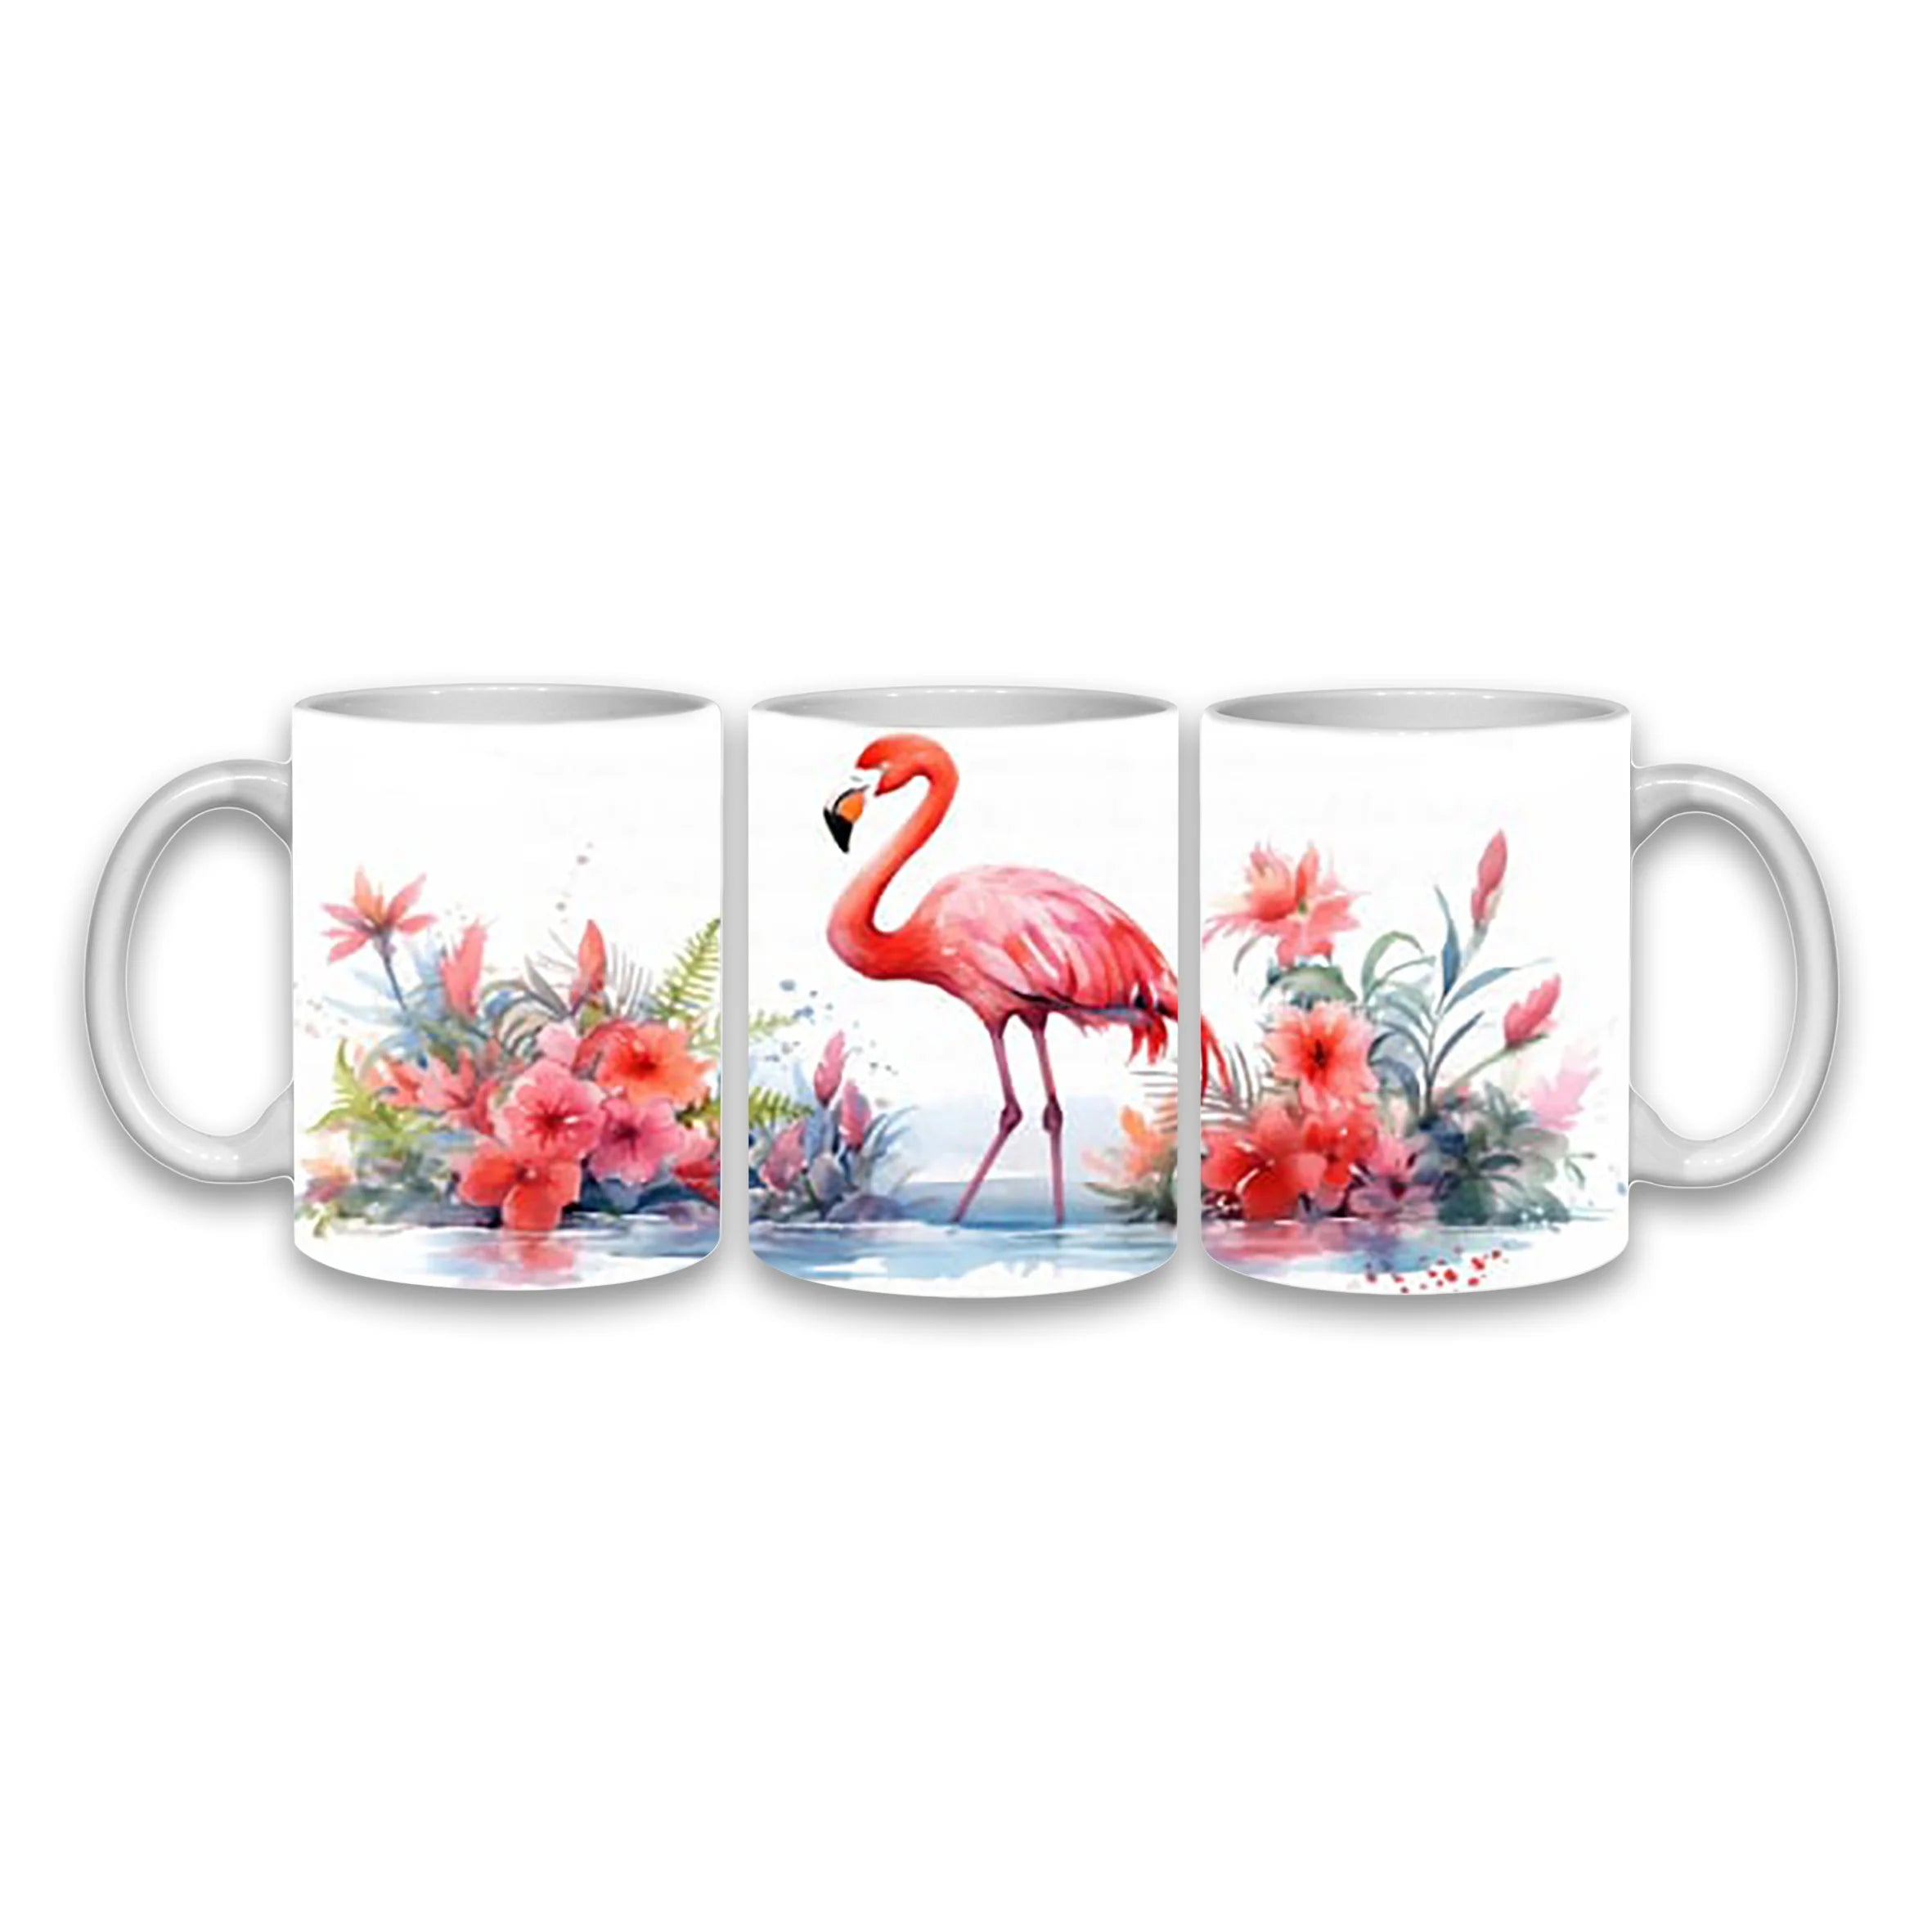 Cana personalizata, Flamingo 2, Ceramica, Alb, 350 ml